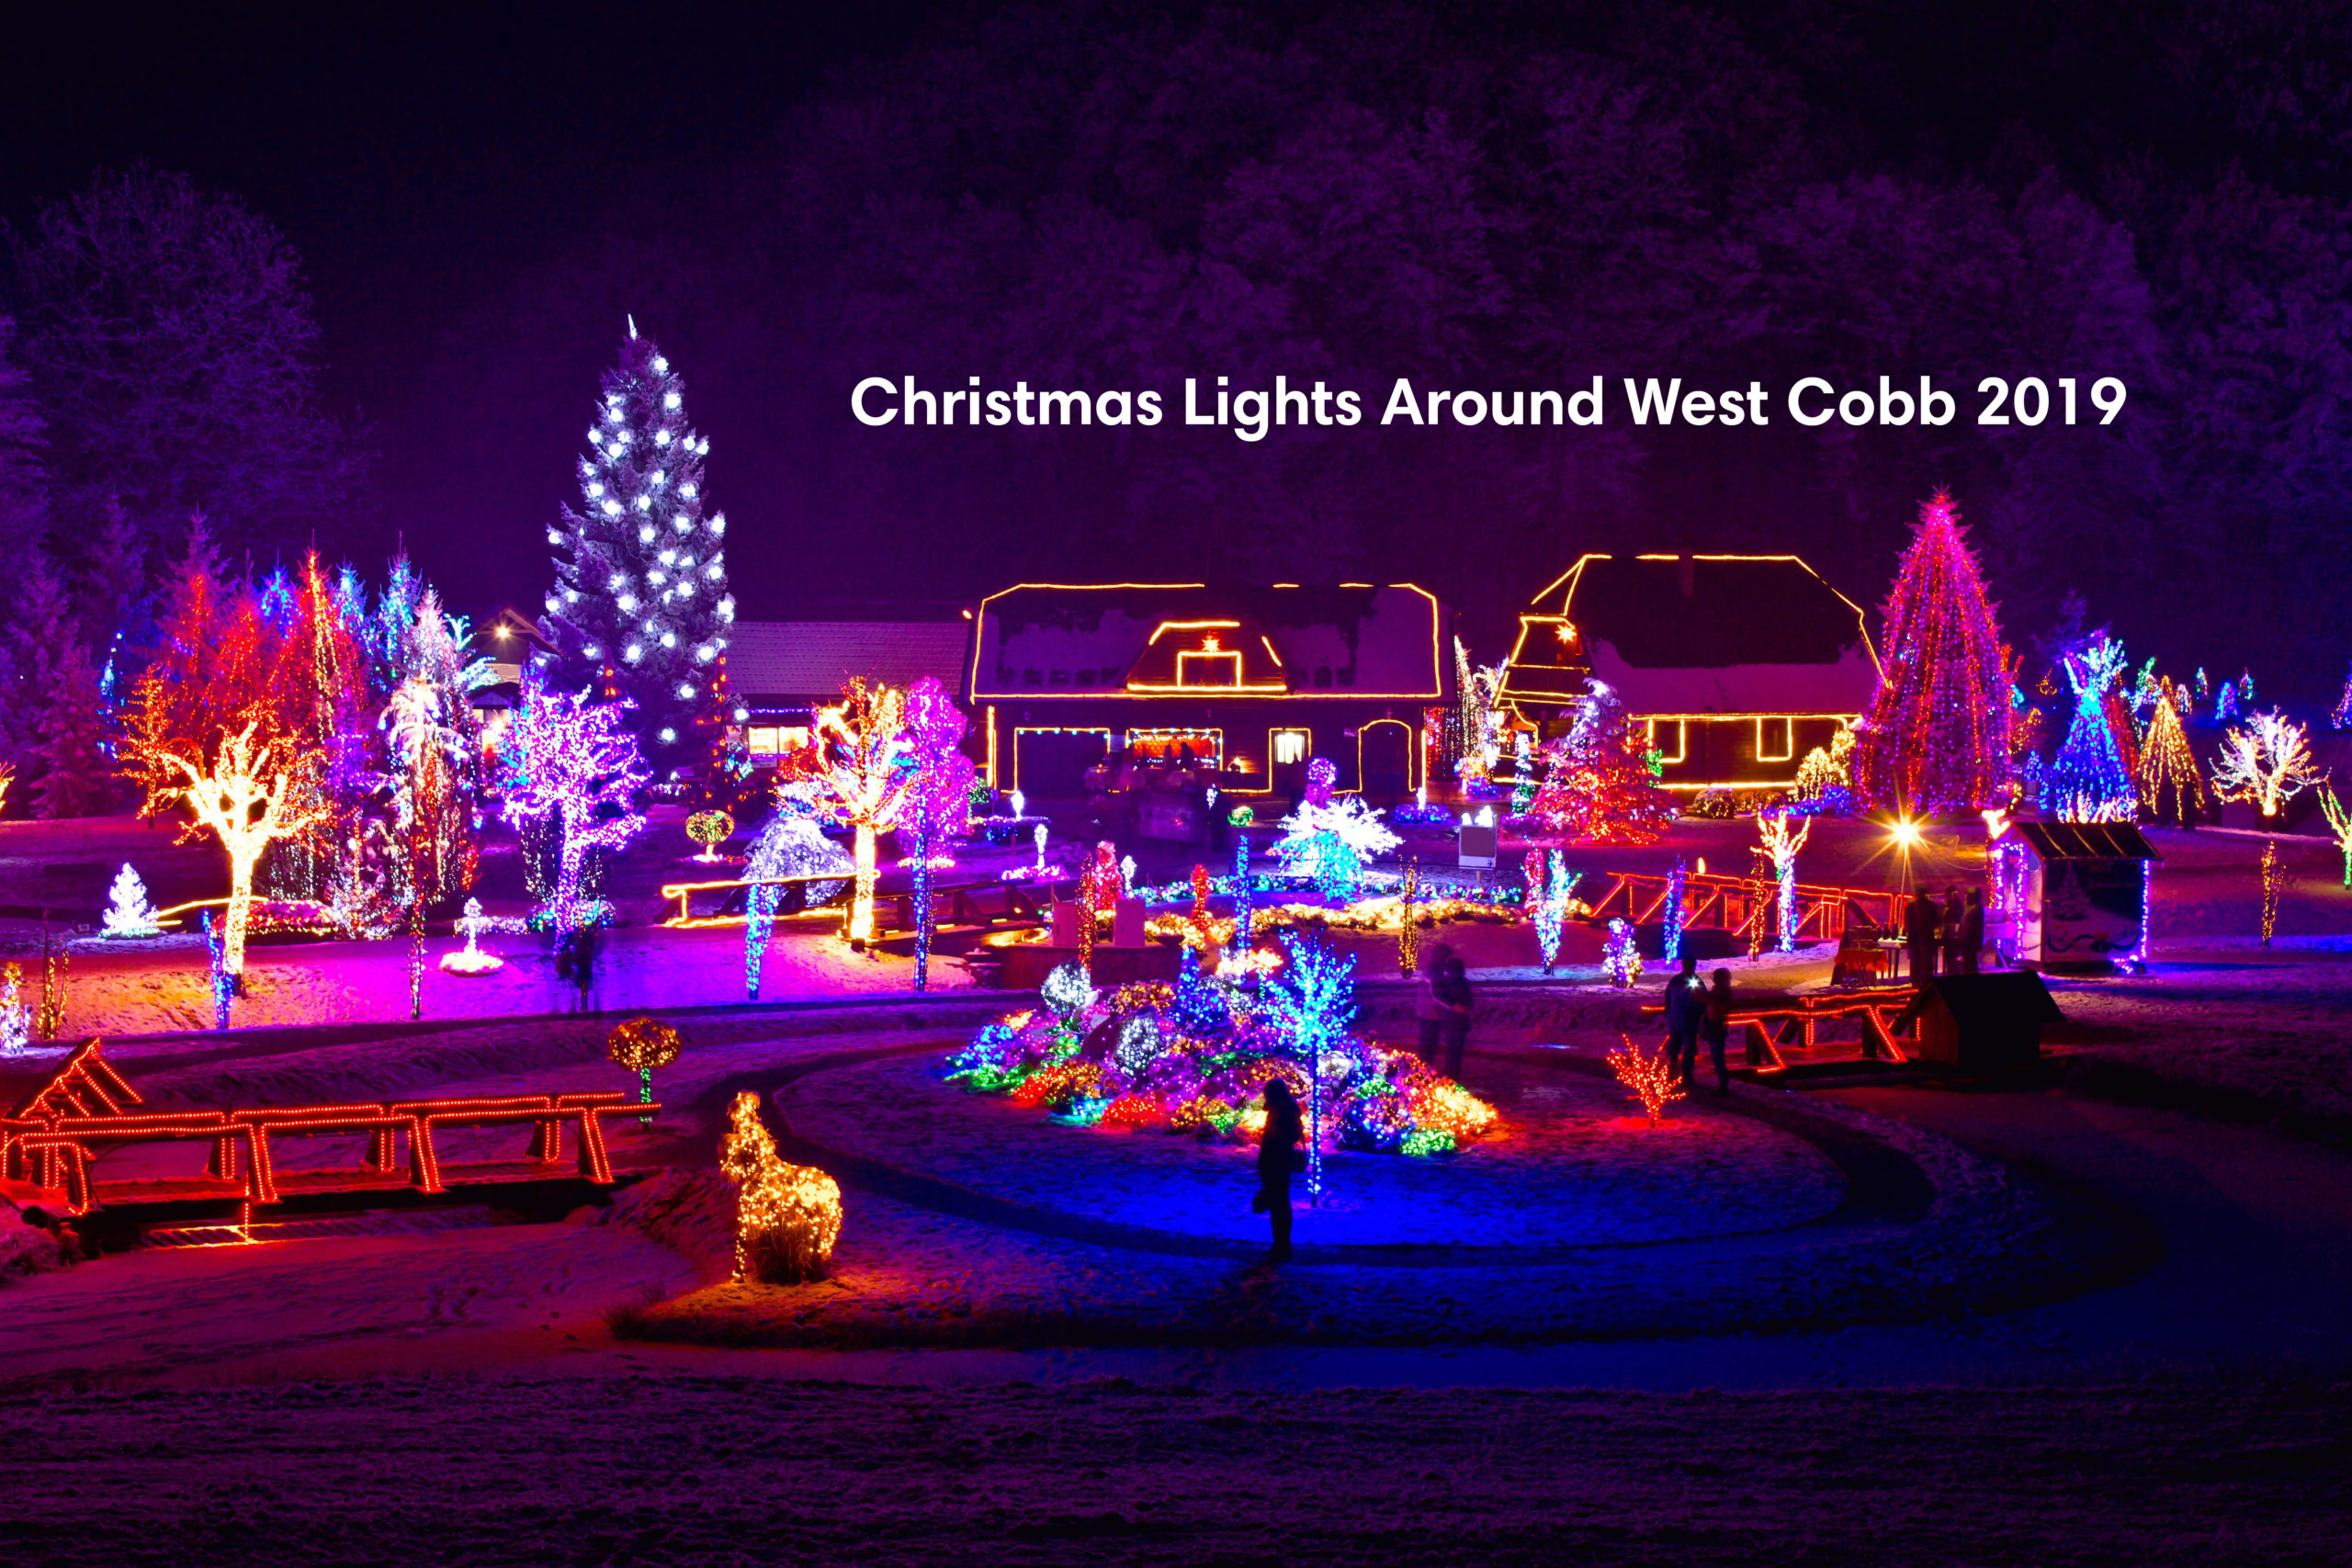 Christmas Lights & Holiday Displays Around West Cobb 2019